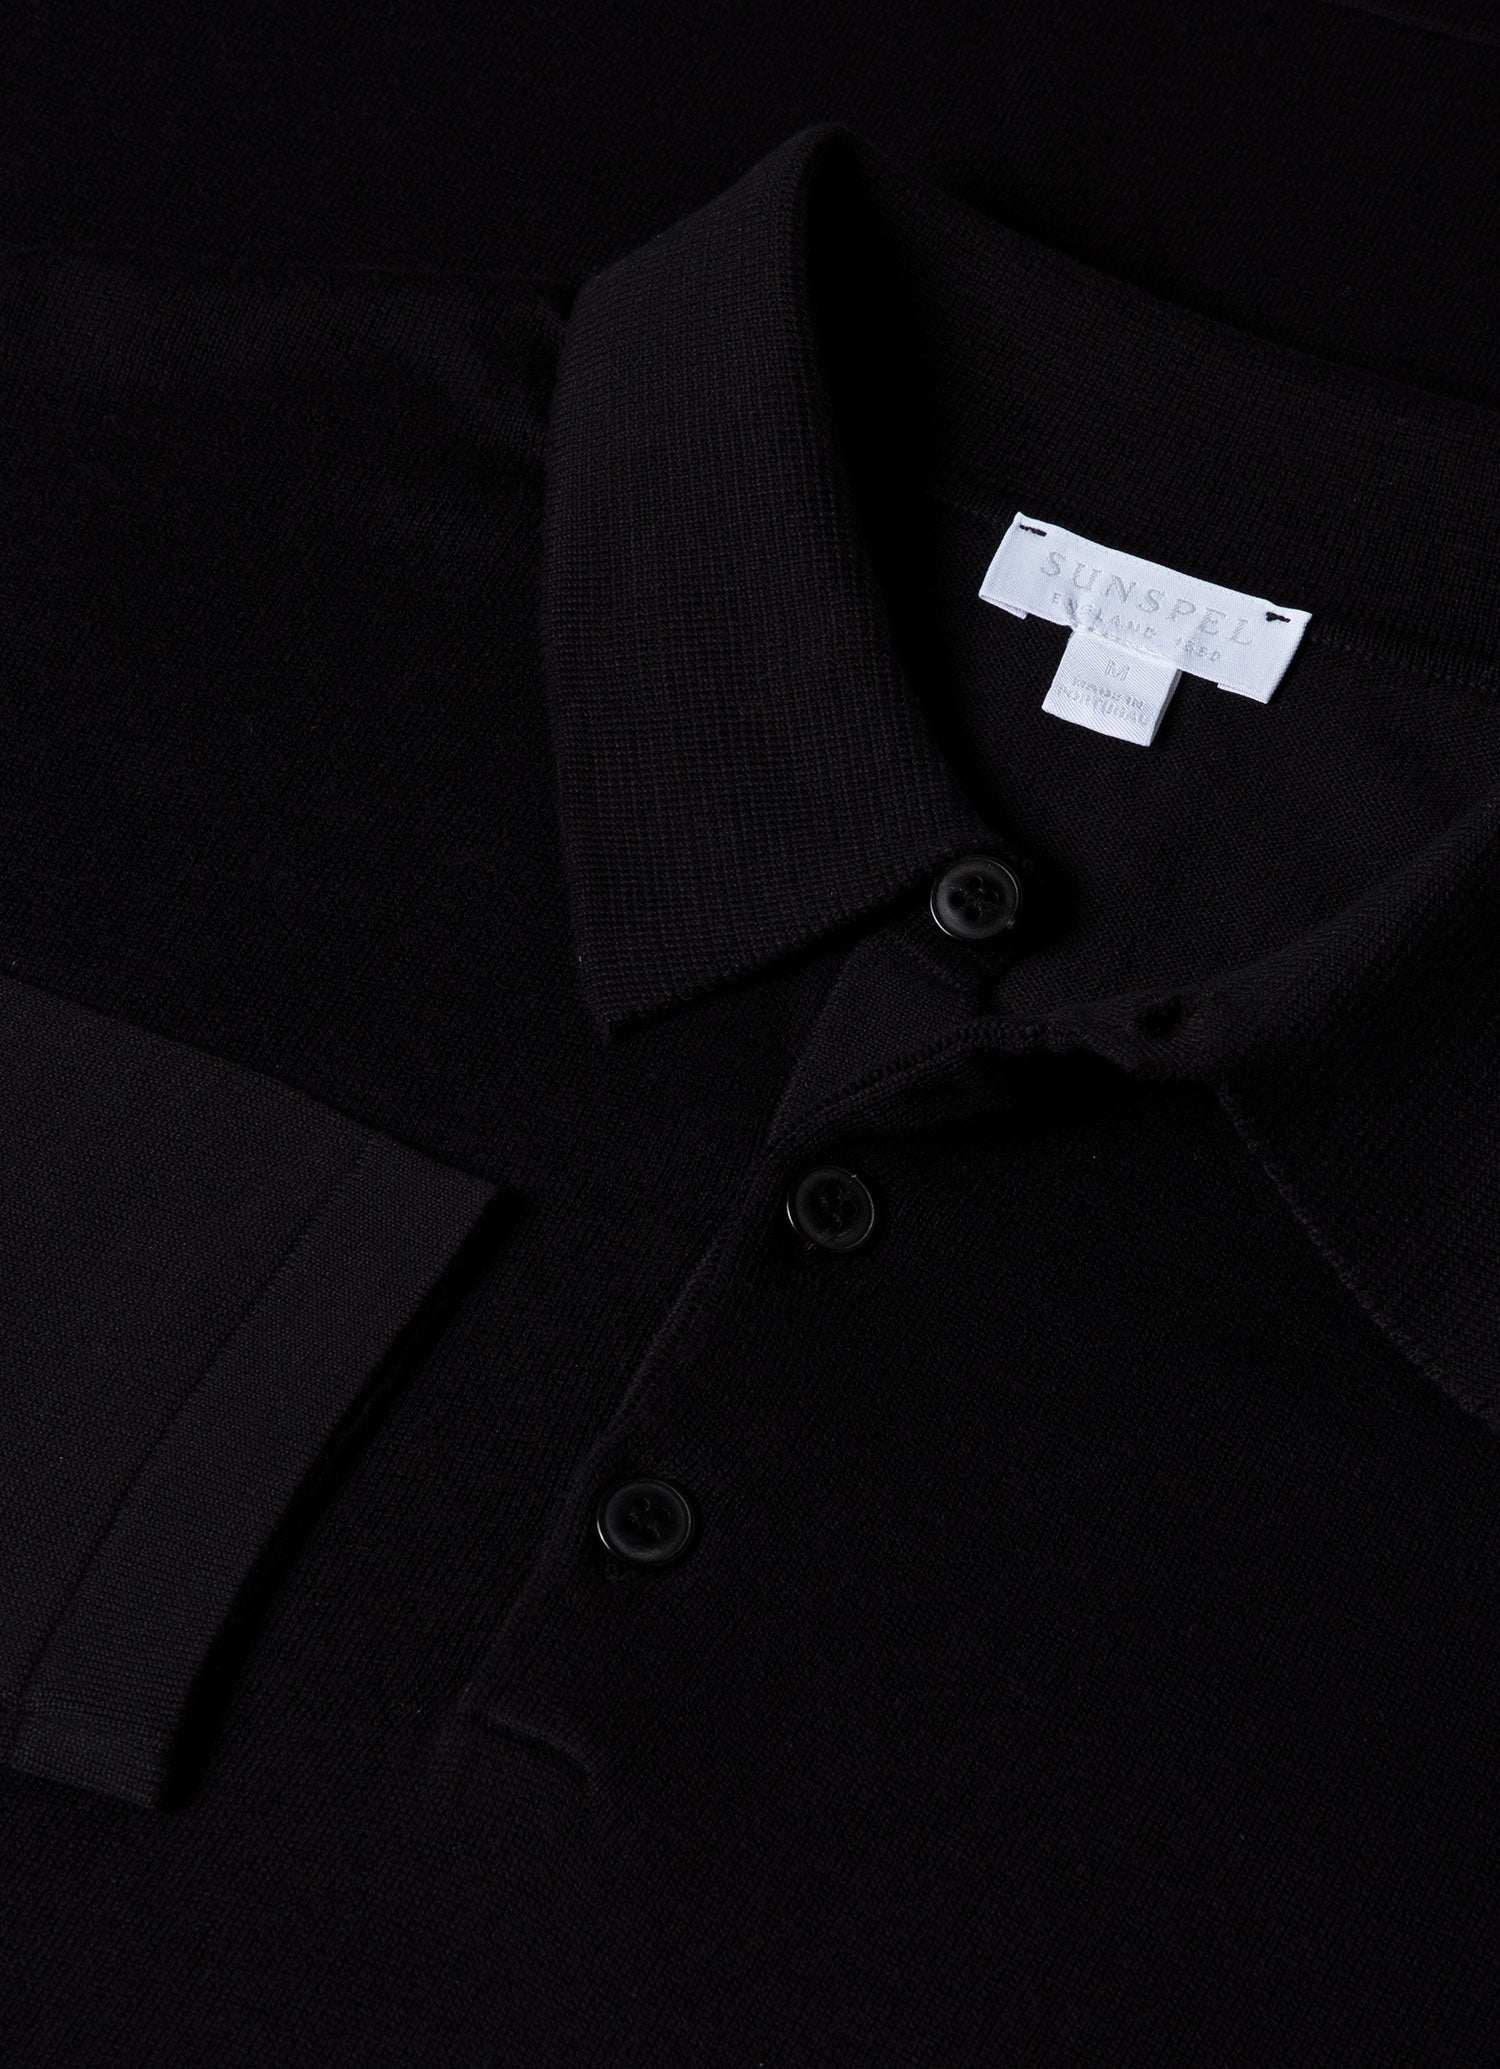 Men's Sea Island Cotton Long Sleeve Polo Shirt in Black